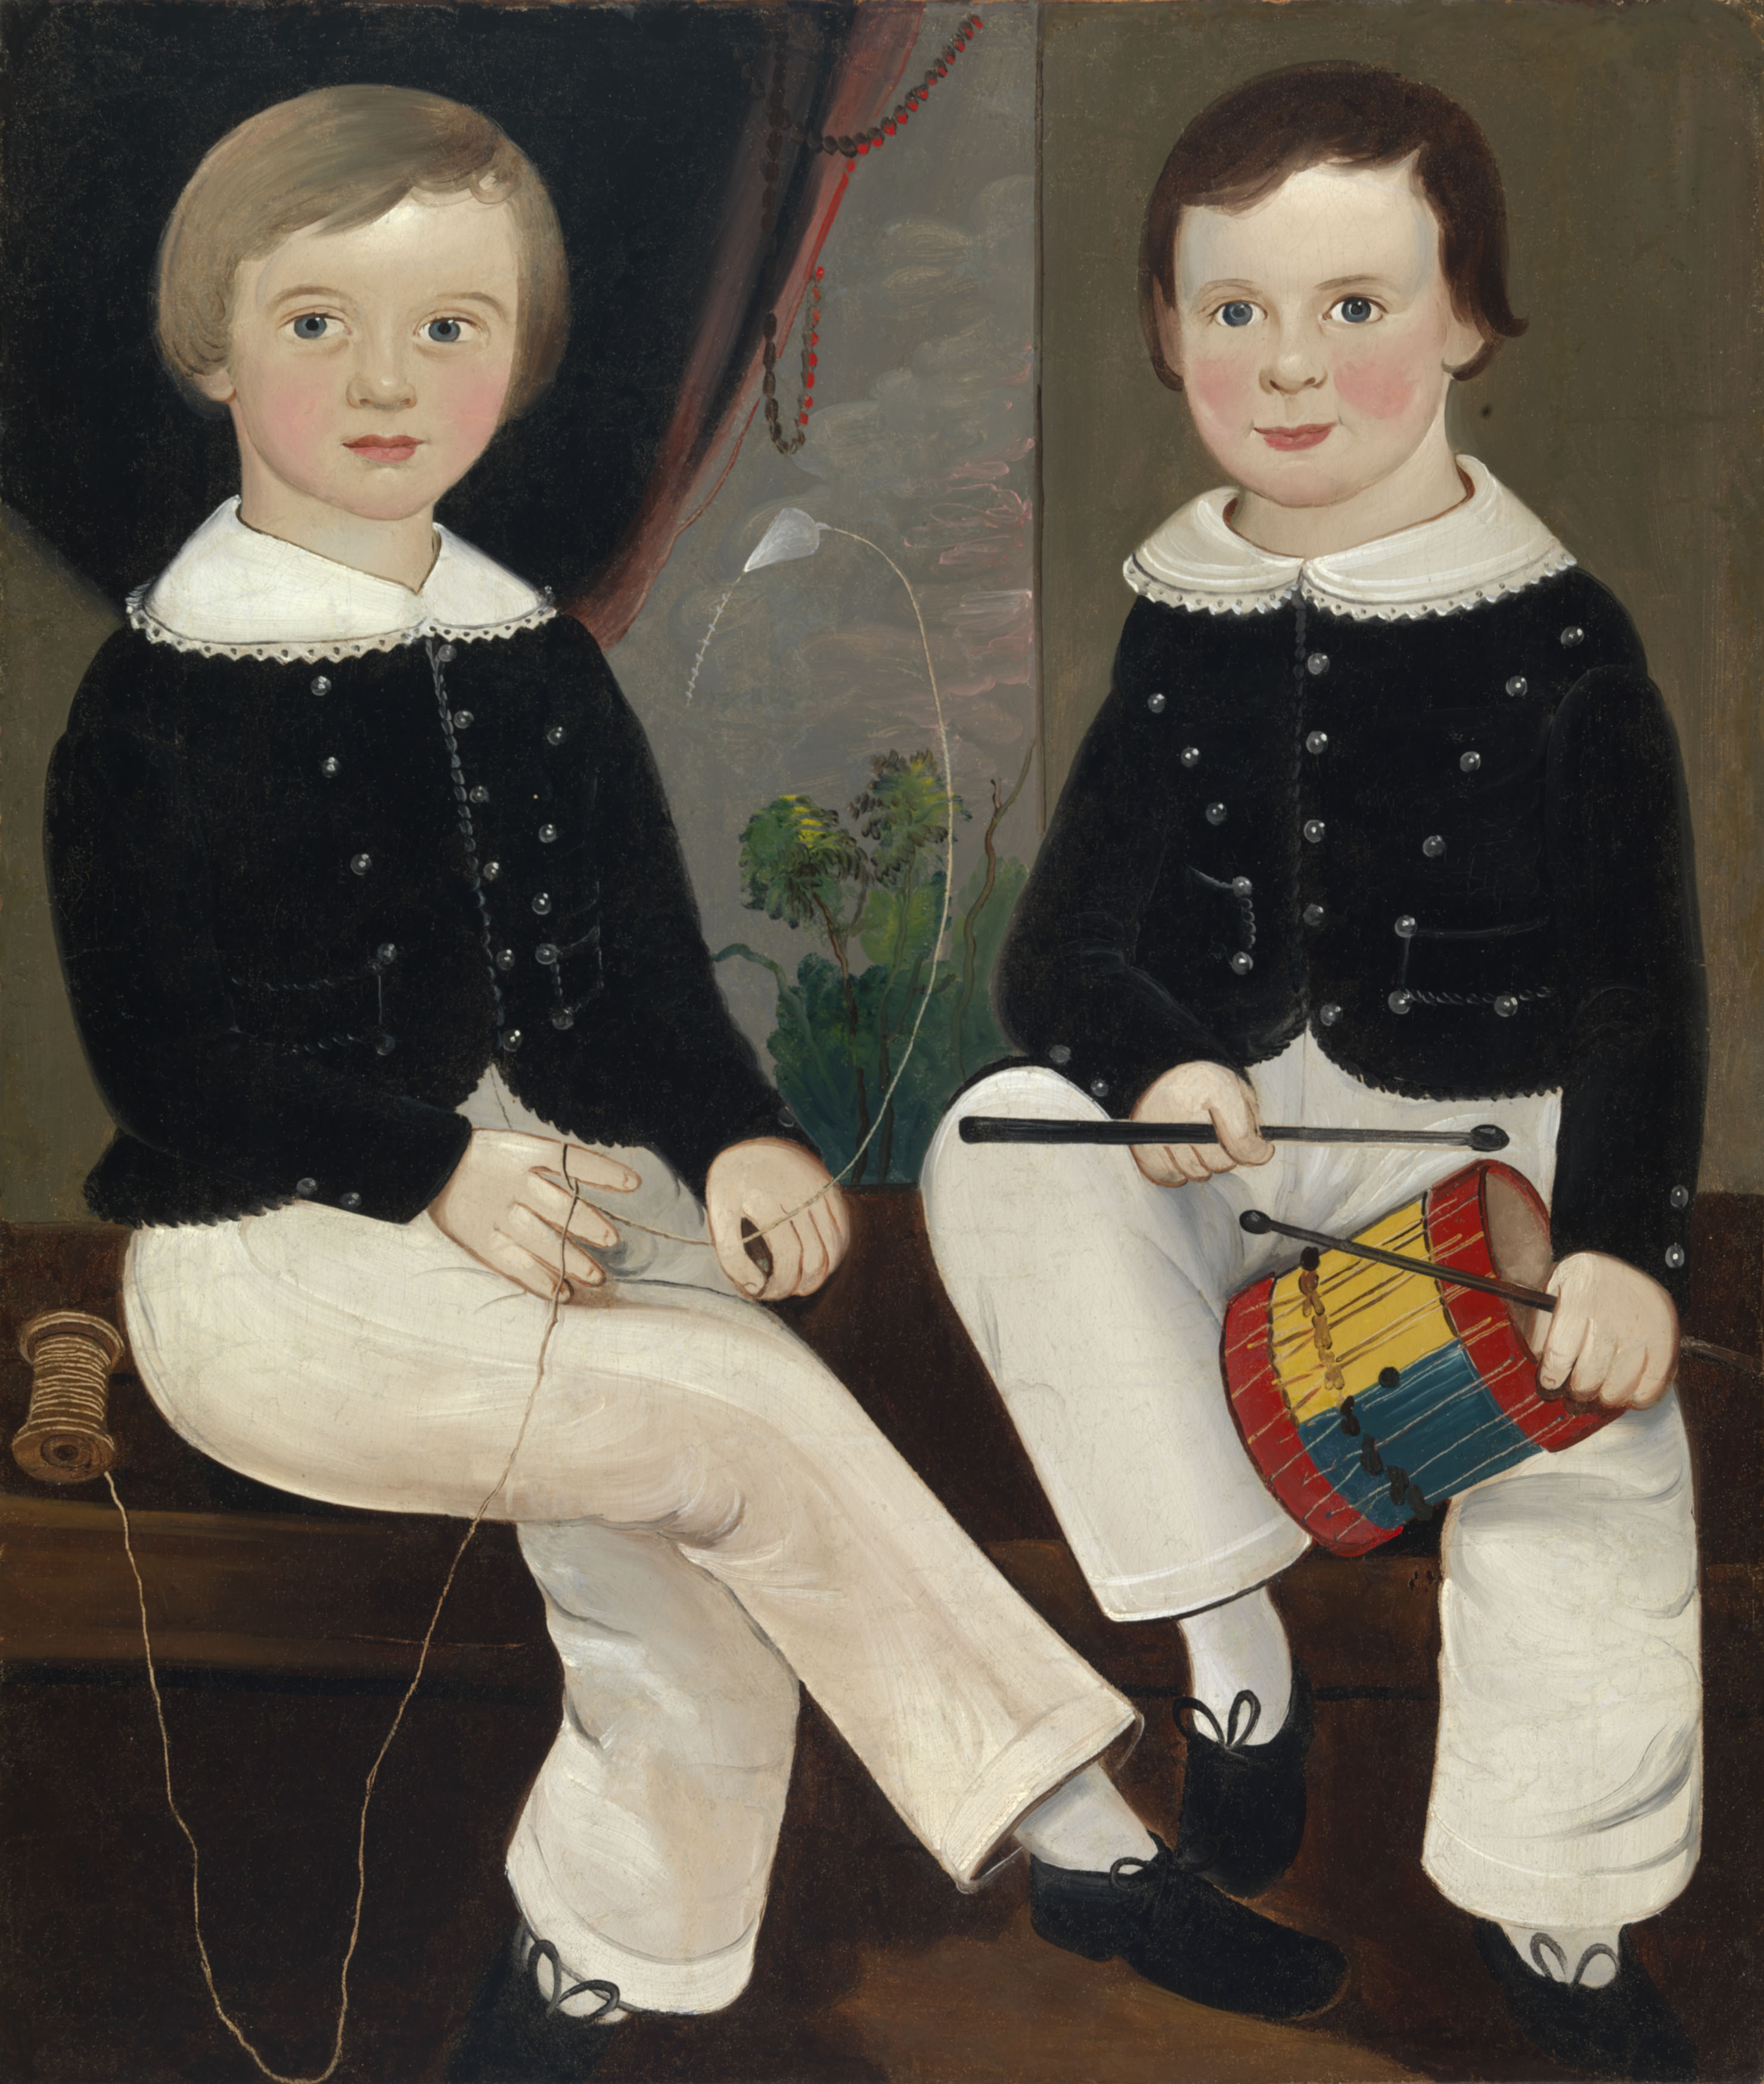 Isaac Josiah and William Mulford Hand by William Matthew Prior